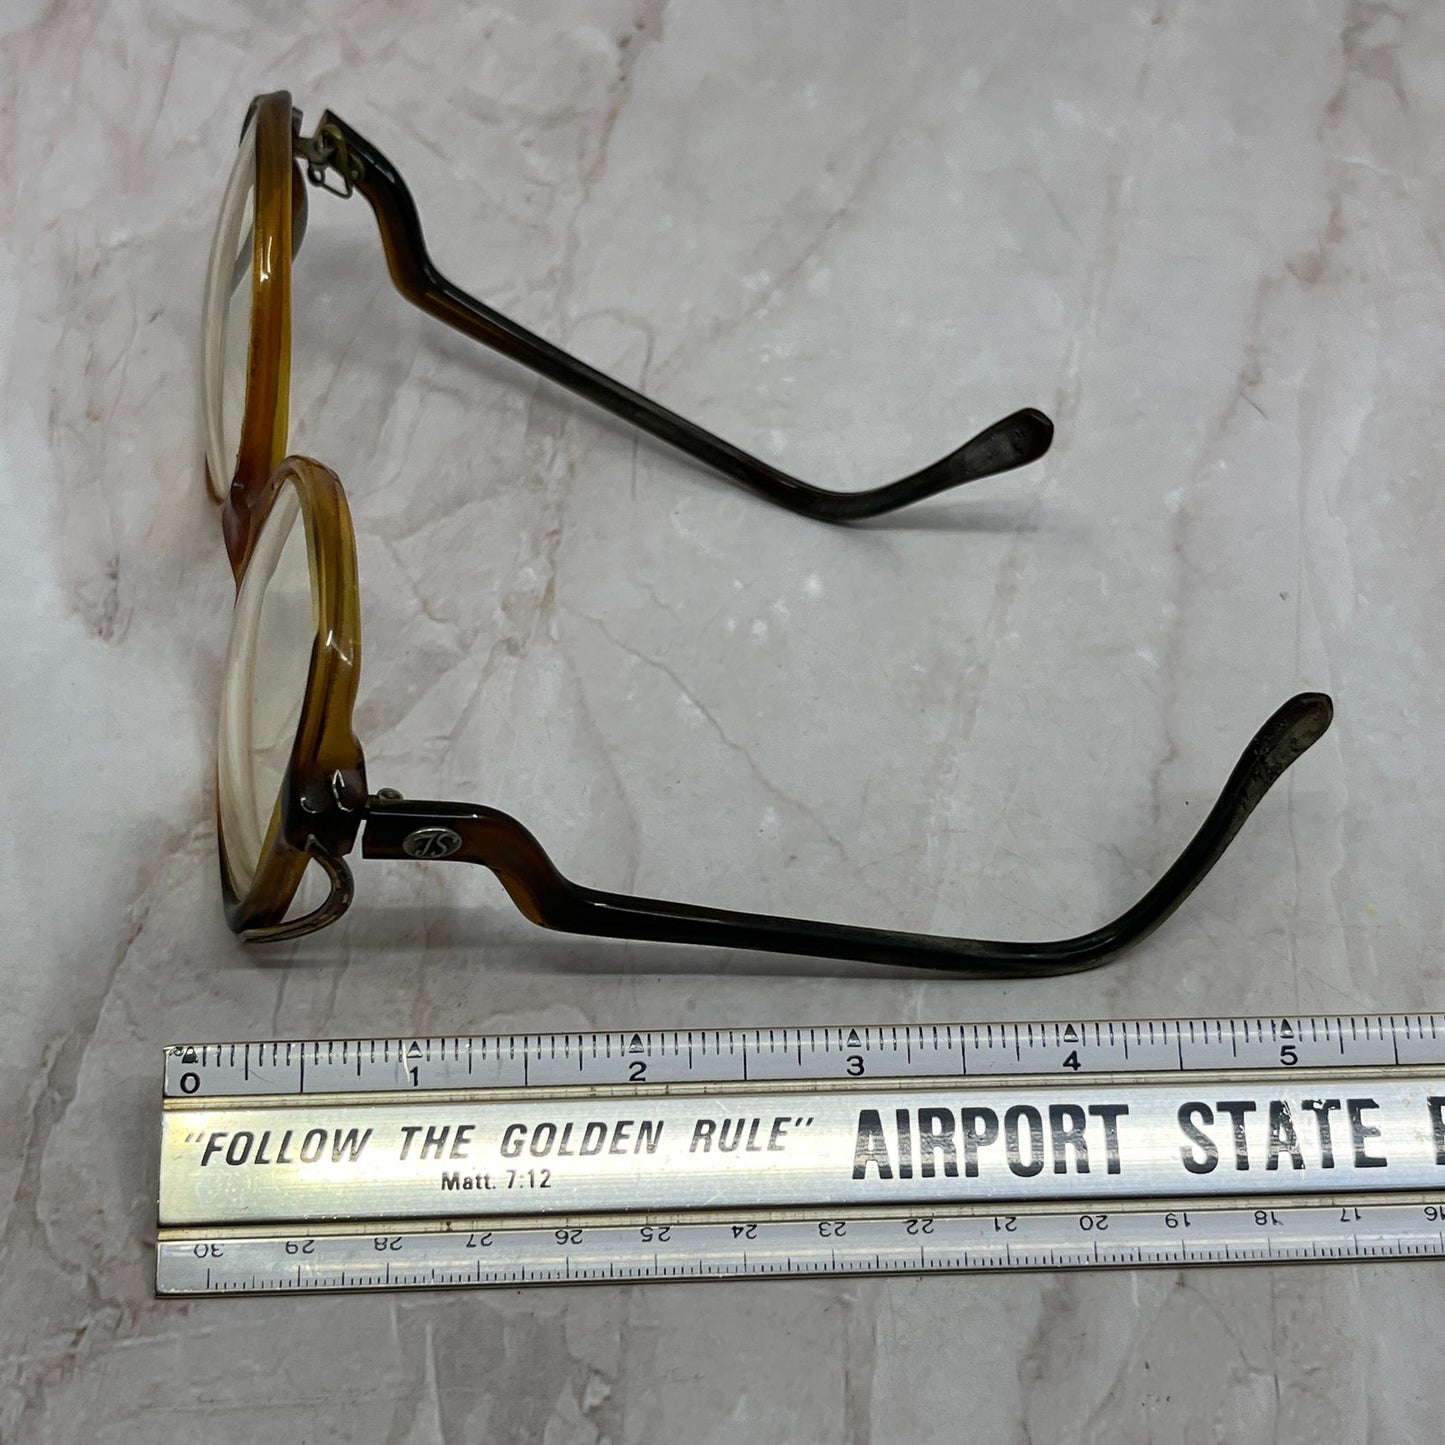 Retro Drop Arm Sophia Loren Brown Acrylic Sunglasses Eyeglasses Frames TG7-G1-1